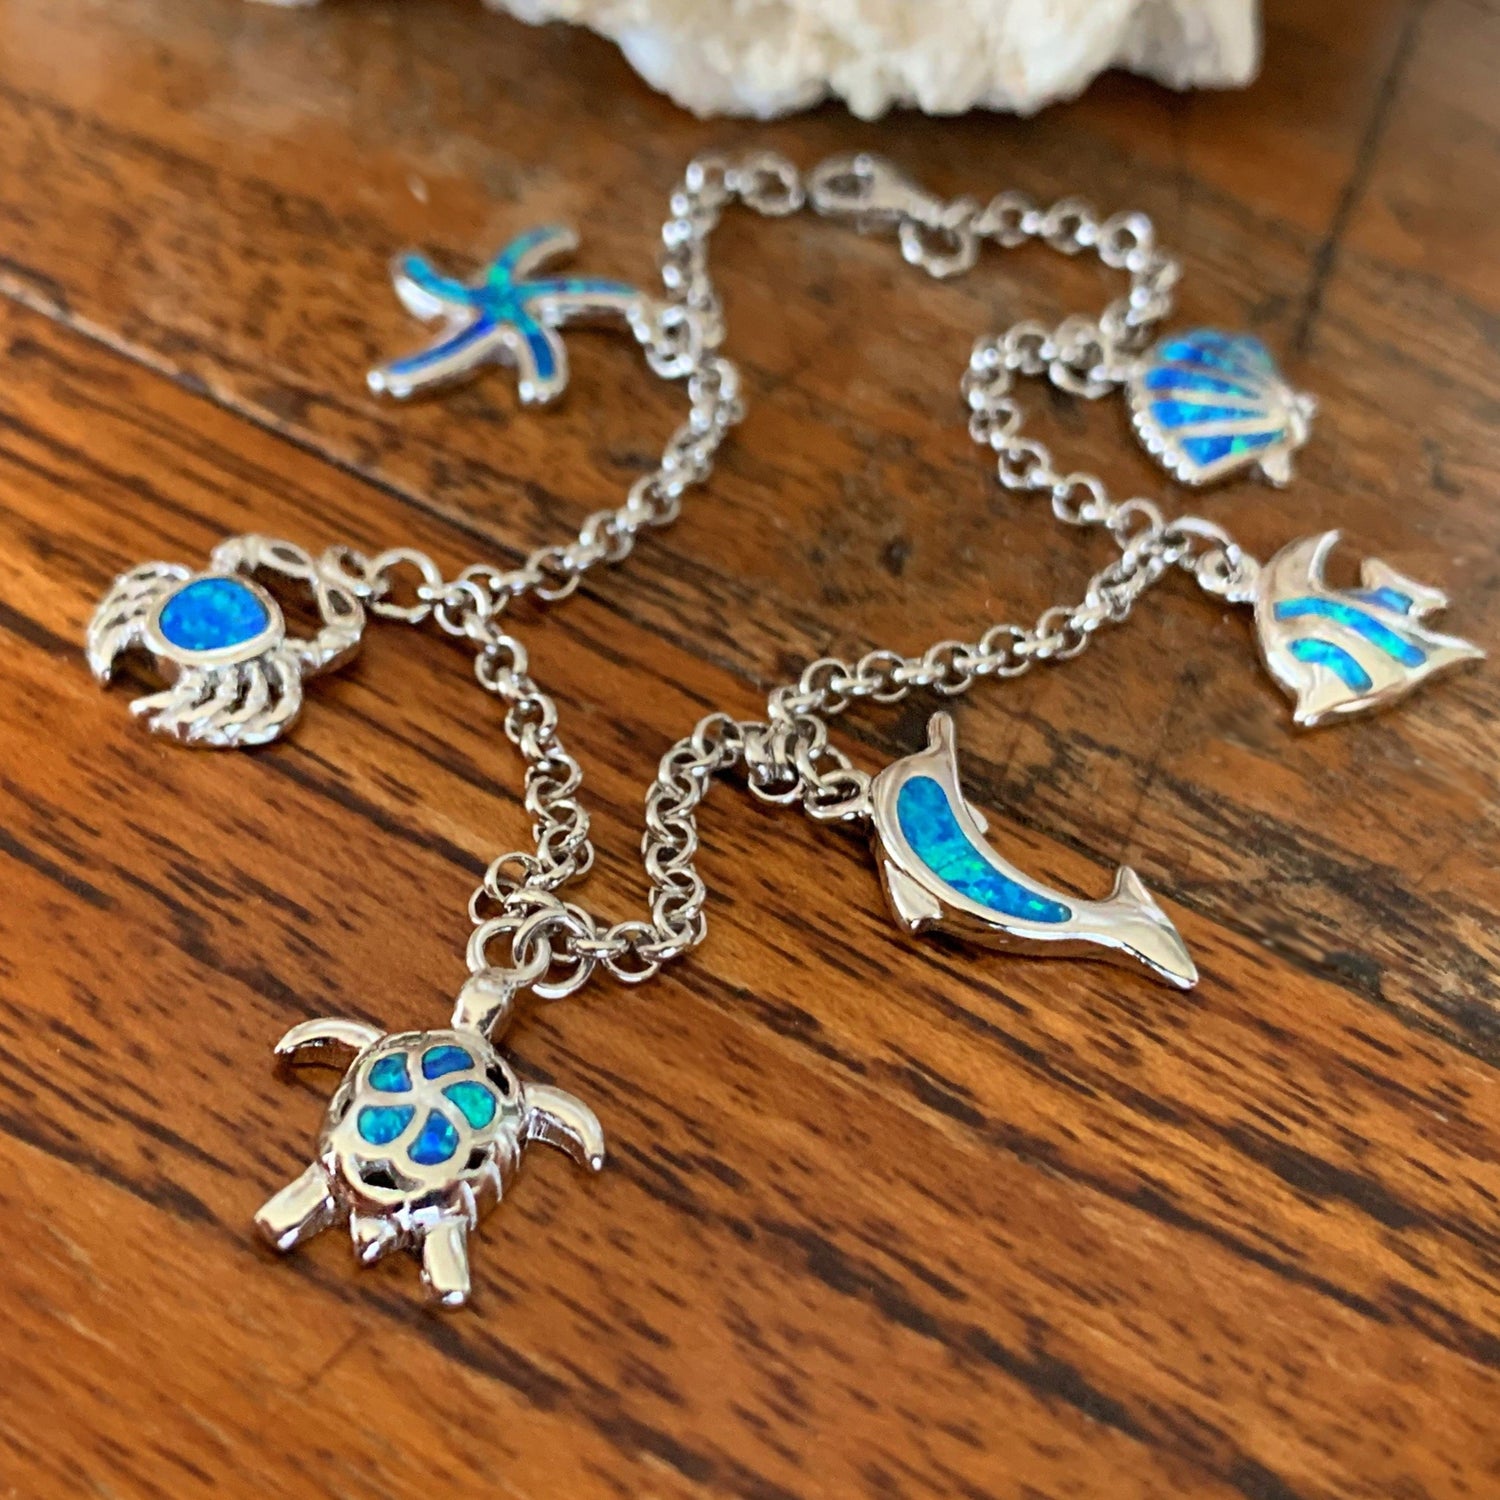 Sea life Charm Bracelet with 6 charms.